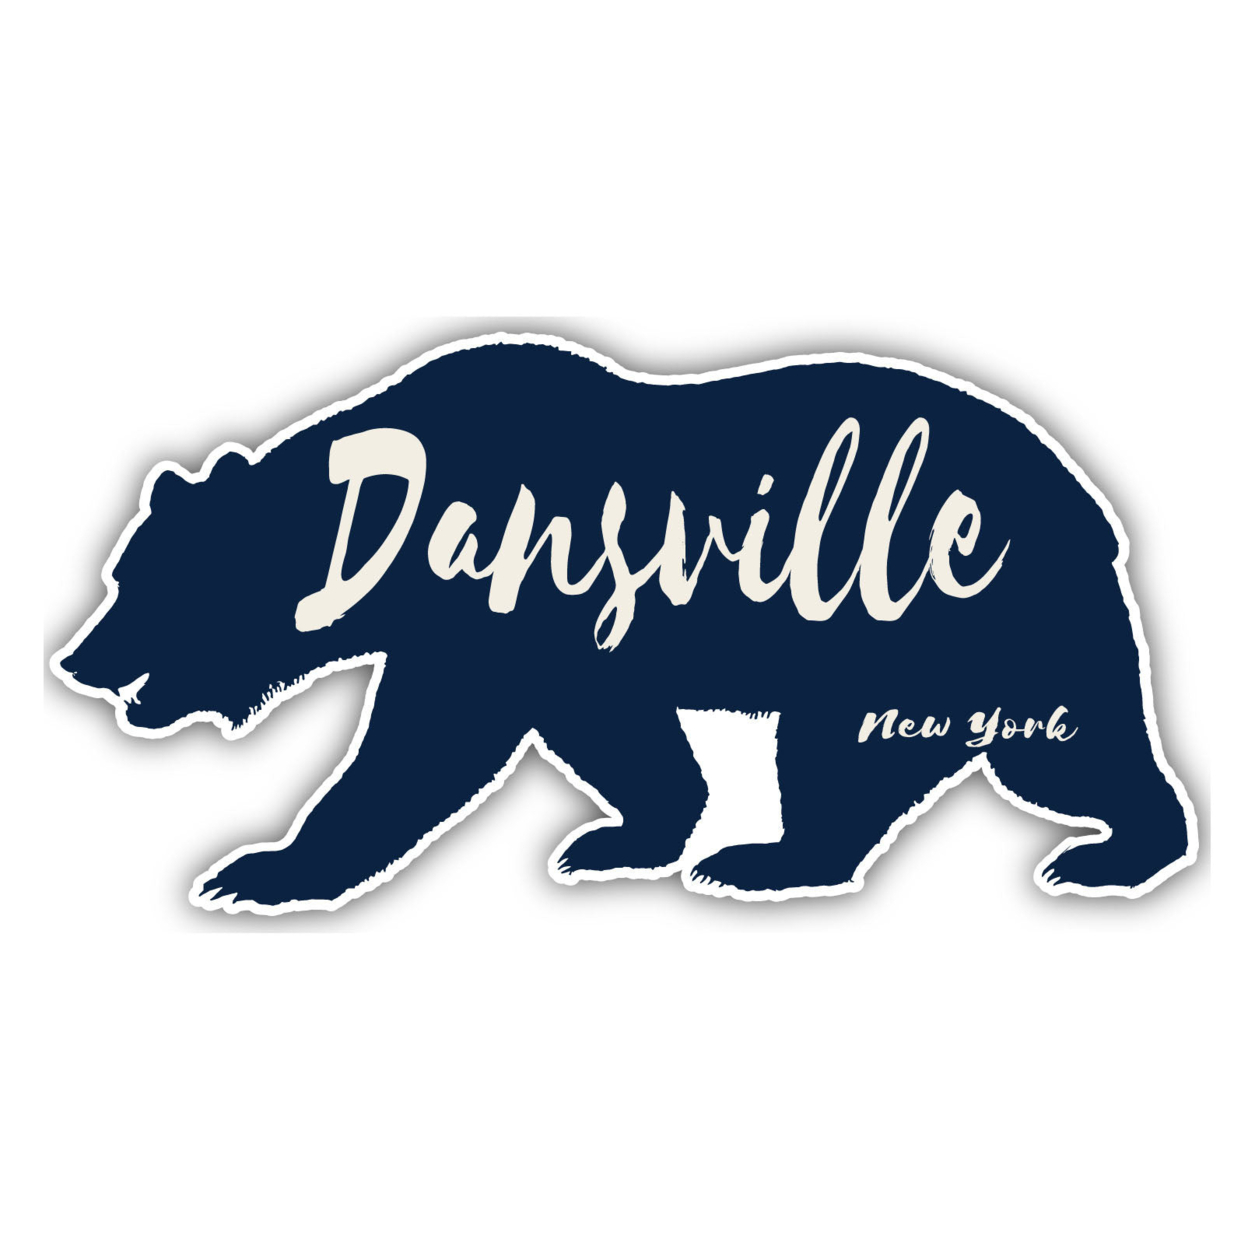 Dansville New York Souvenir Decorative Stickers (Choose Theme And Size) - Single Unit, 12-Inch, Bear